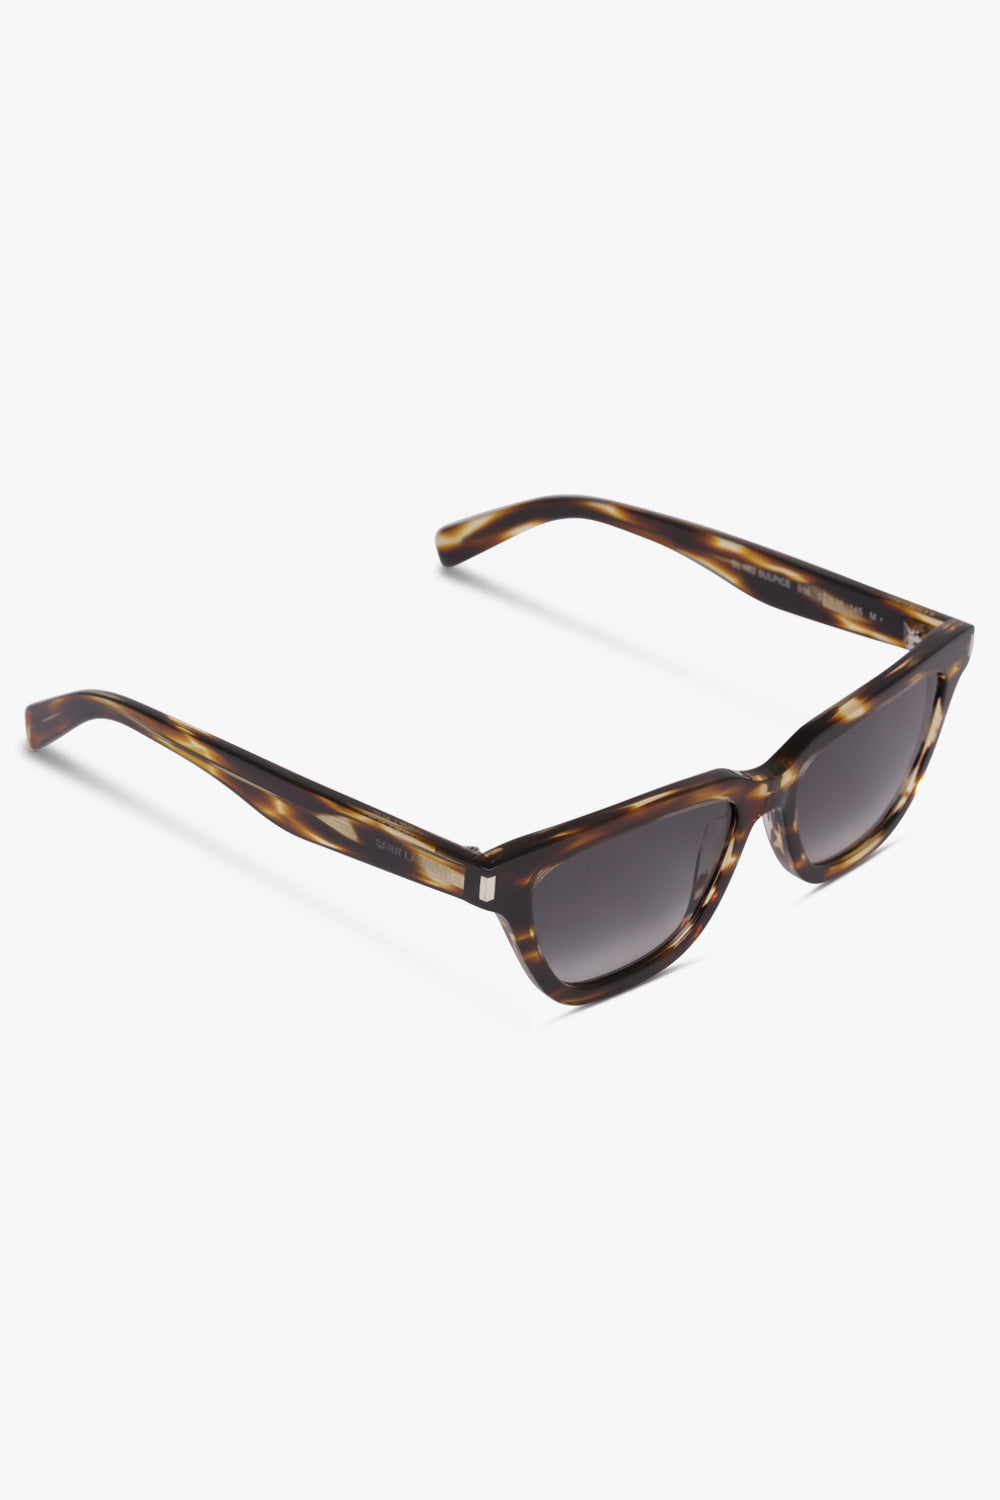 SAINT LAURENT ACCESSORIES Brown Sulpice 462 Sunglasses | Flamed Havana/Gradient Grey